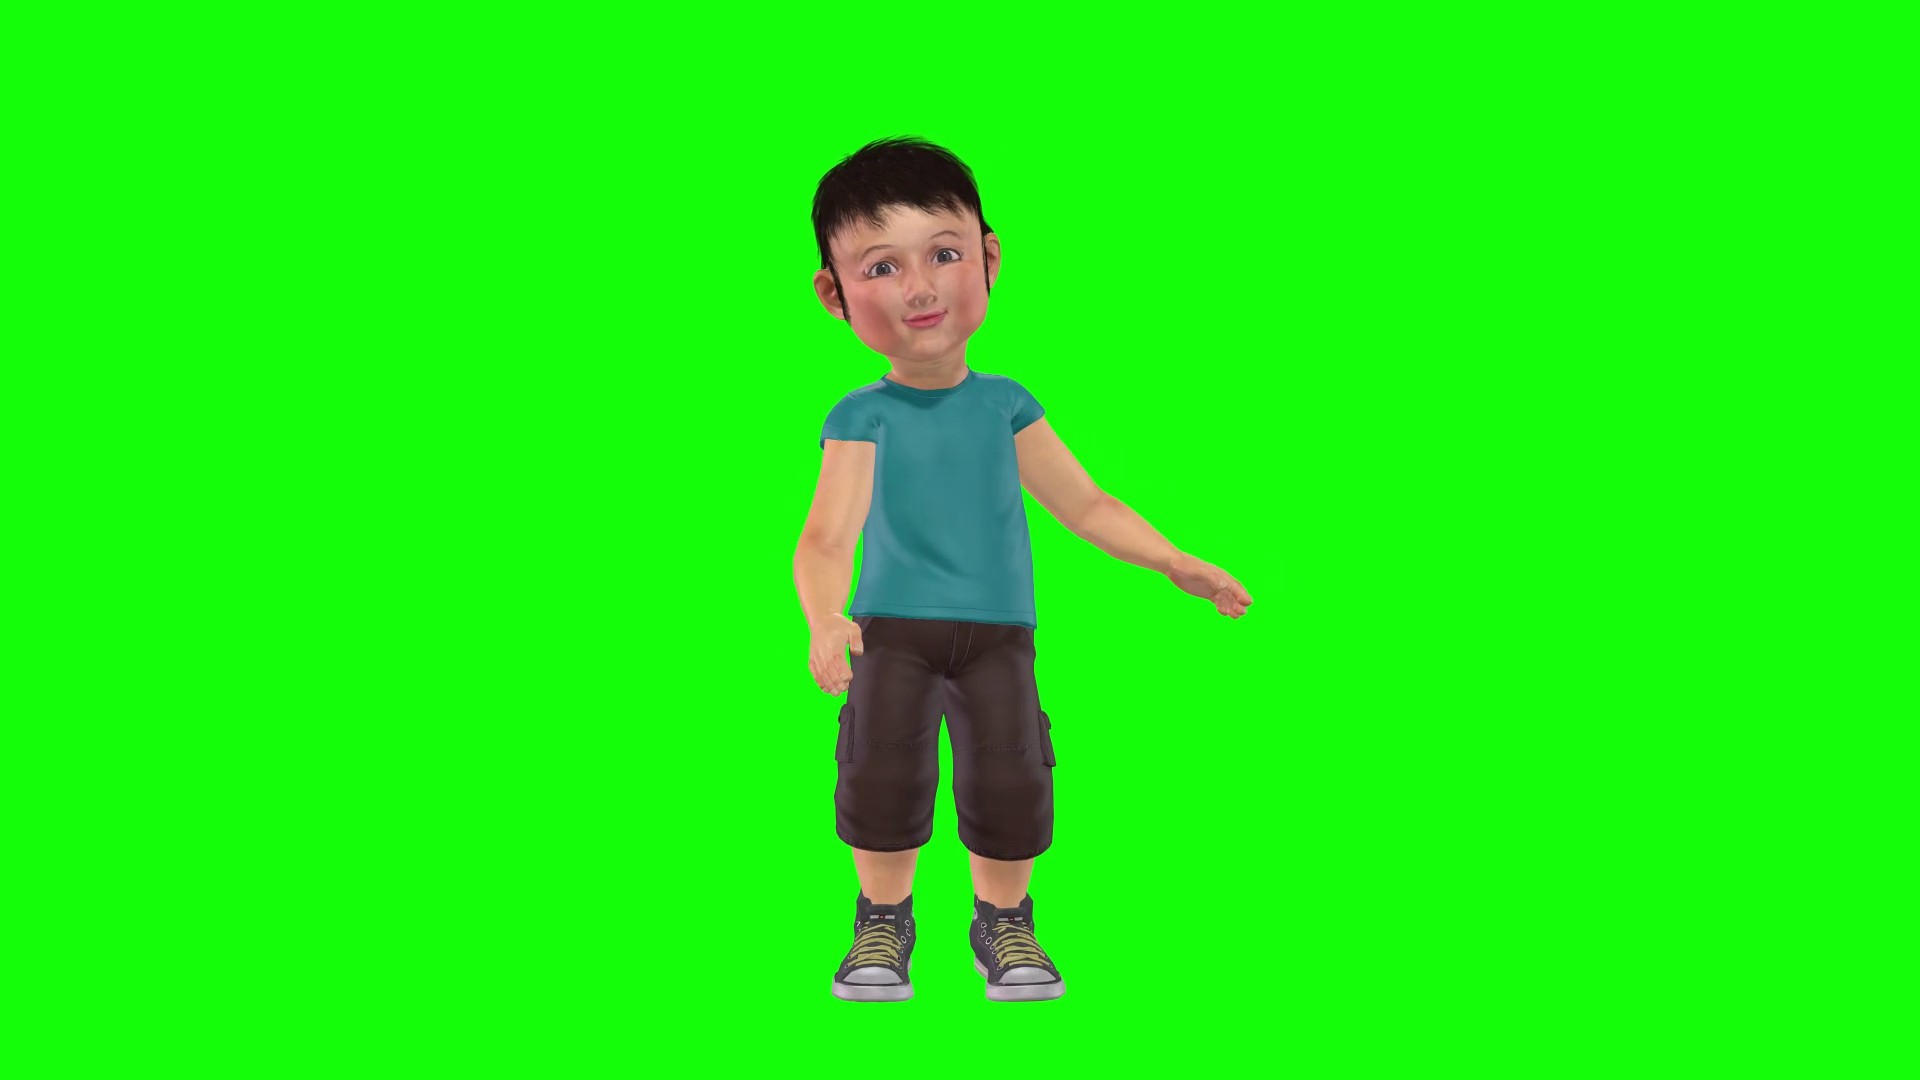 A boy standing in green chroma key